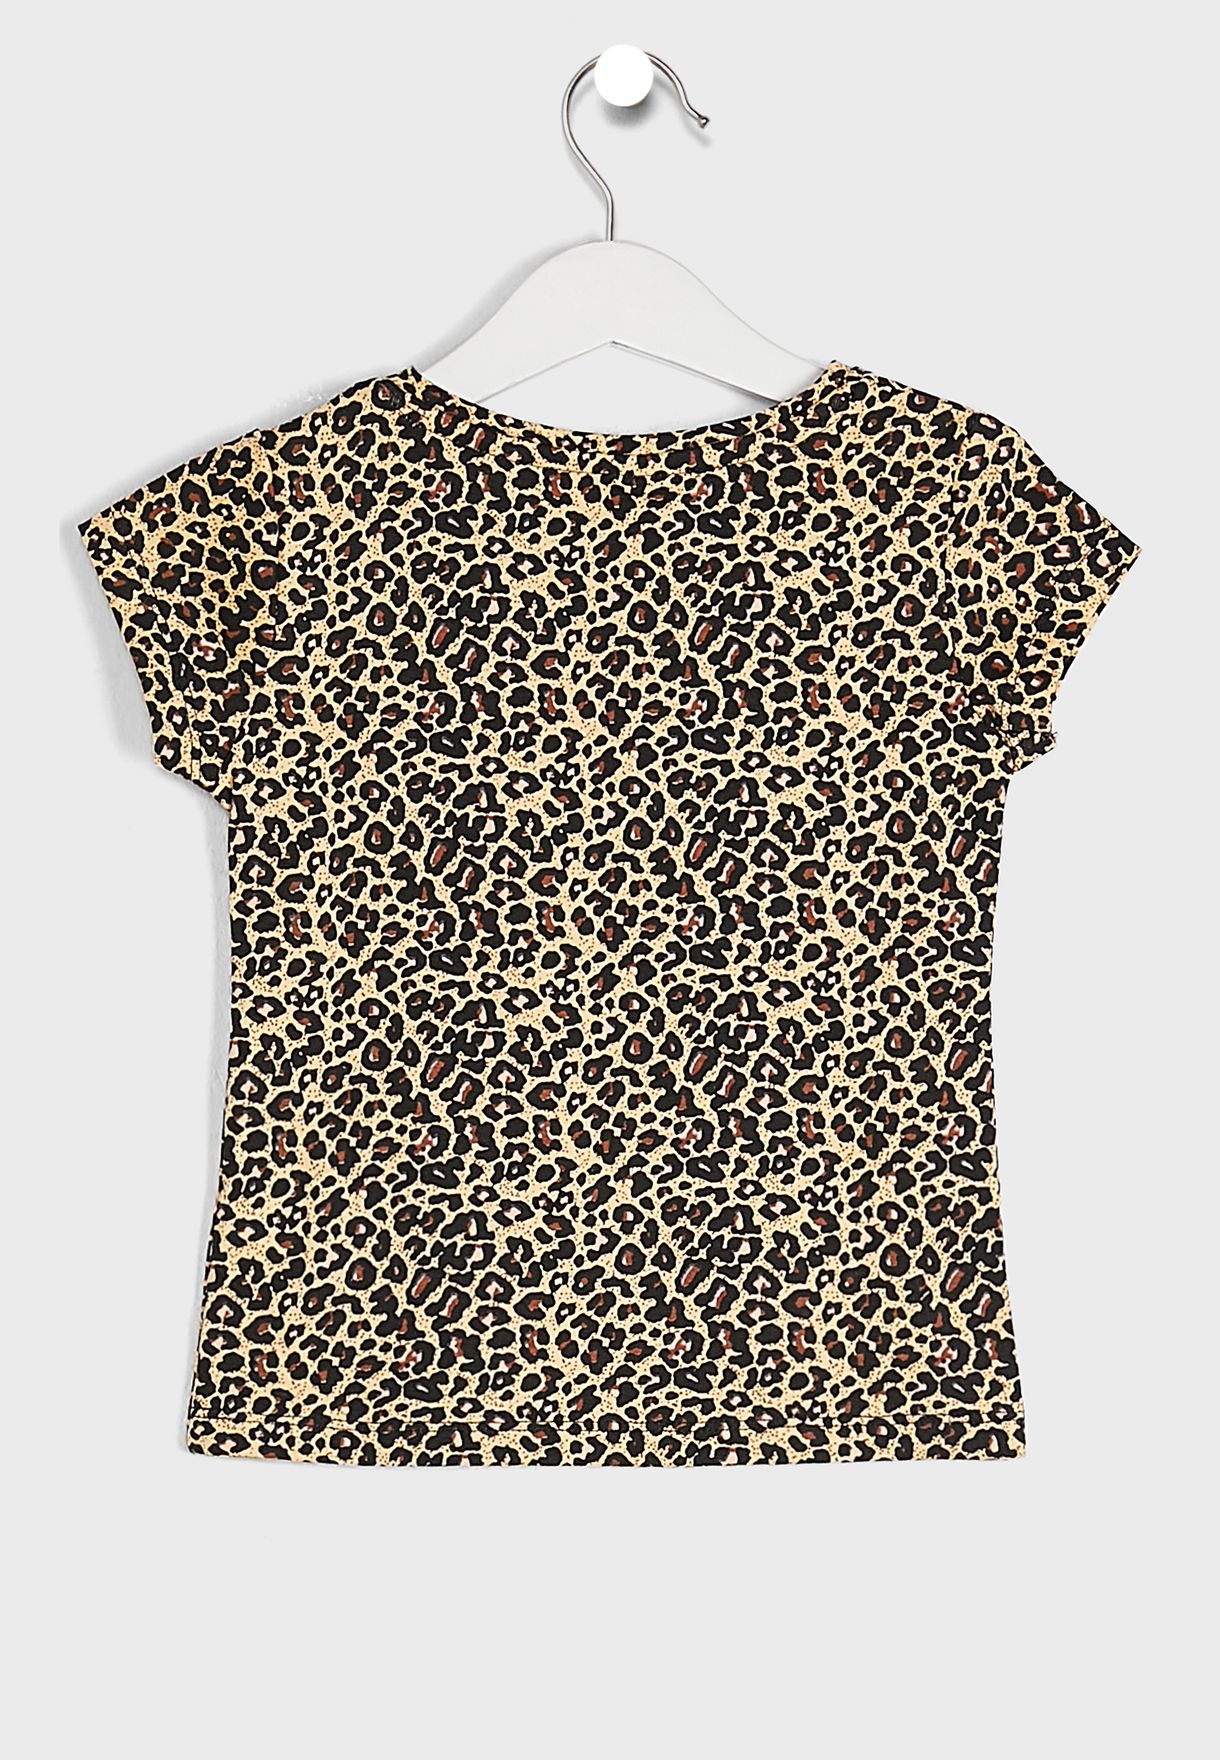 Kids Leopard Print T-Shirt + Leggings Set